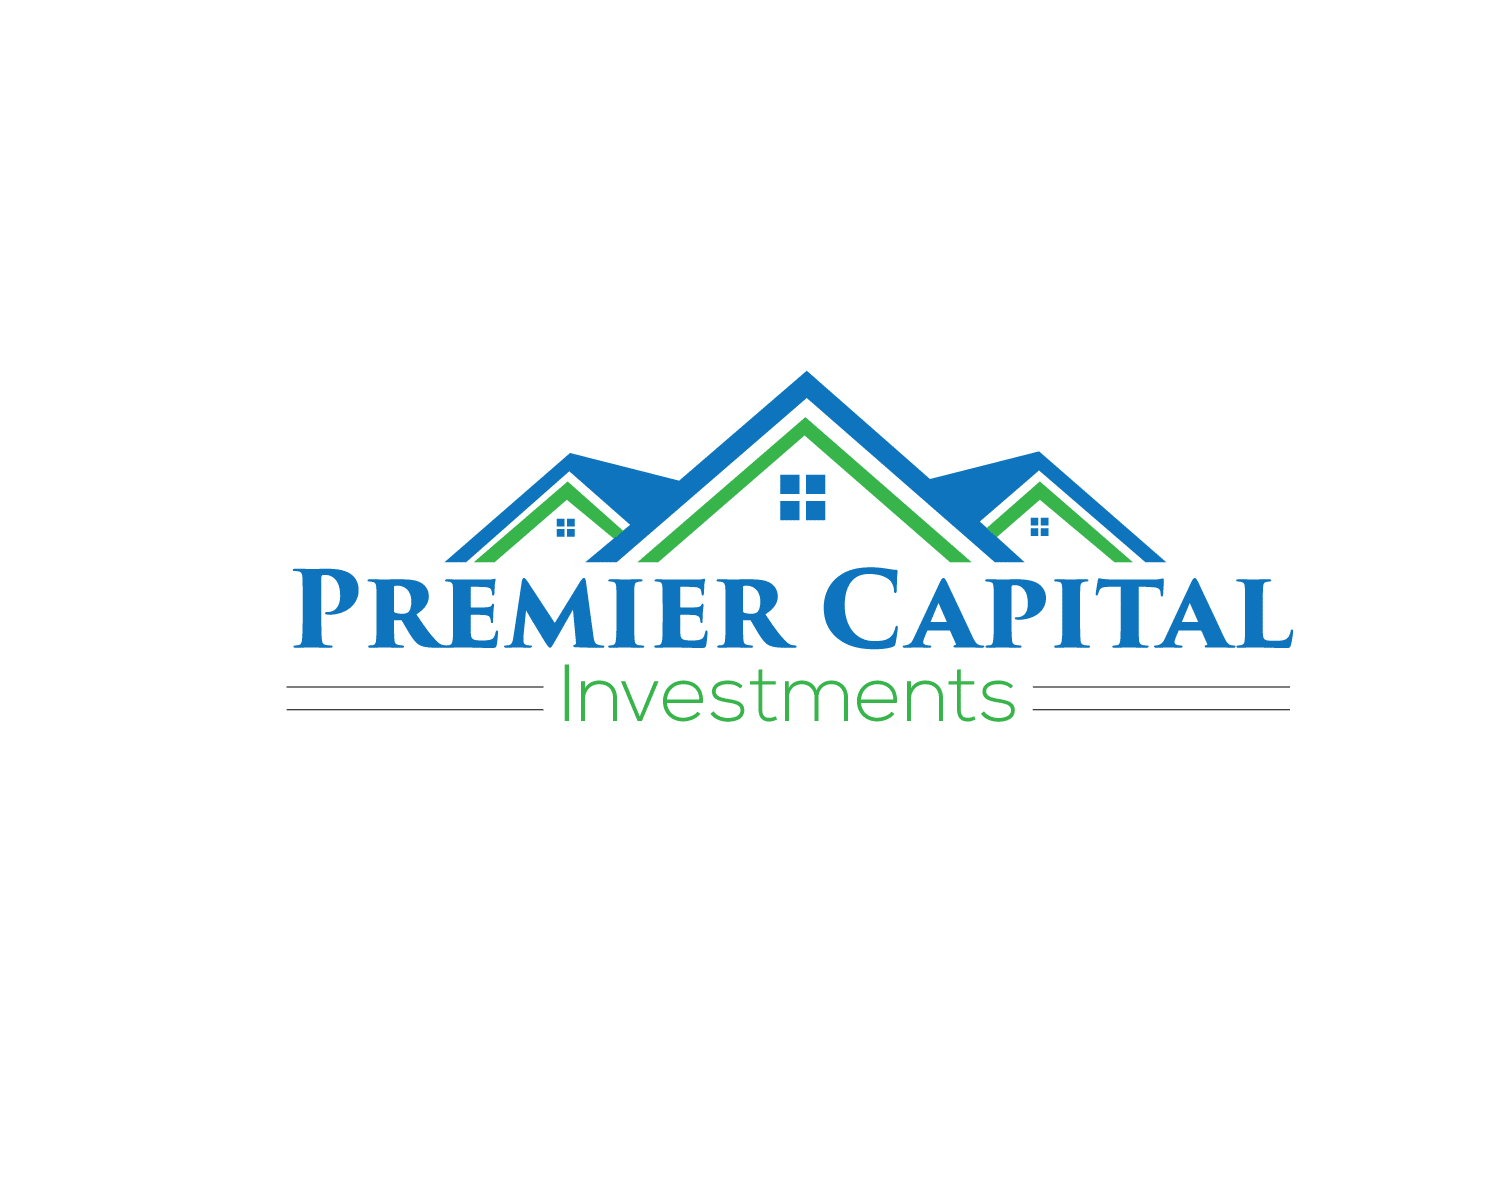 Premier Capital Investments, Inc.